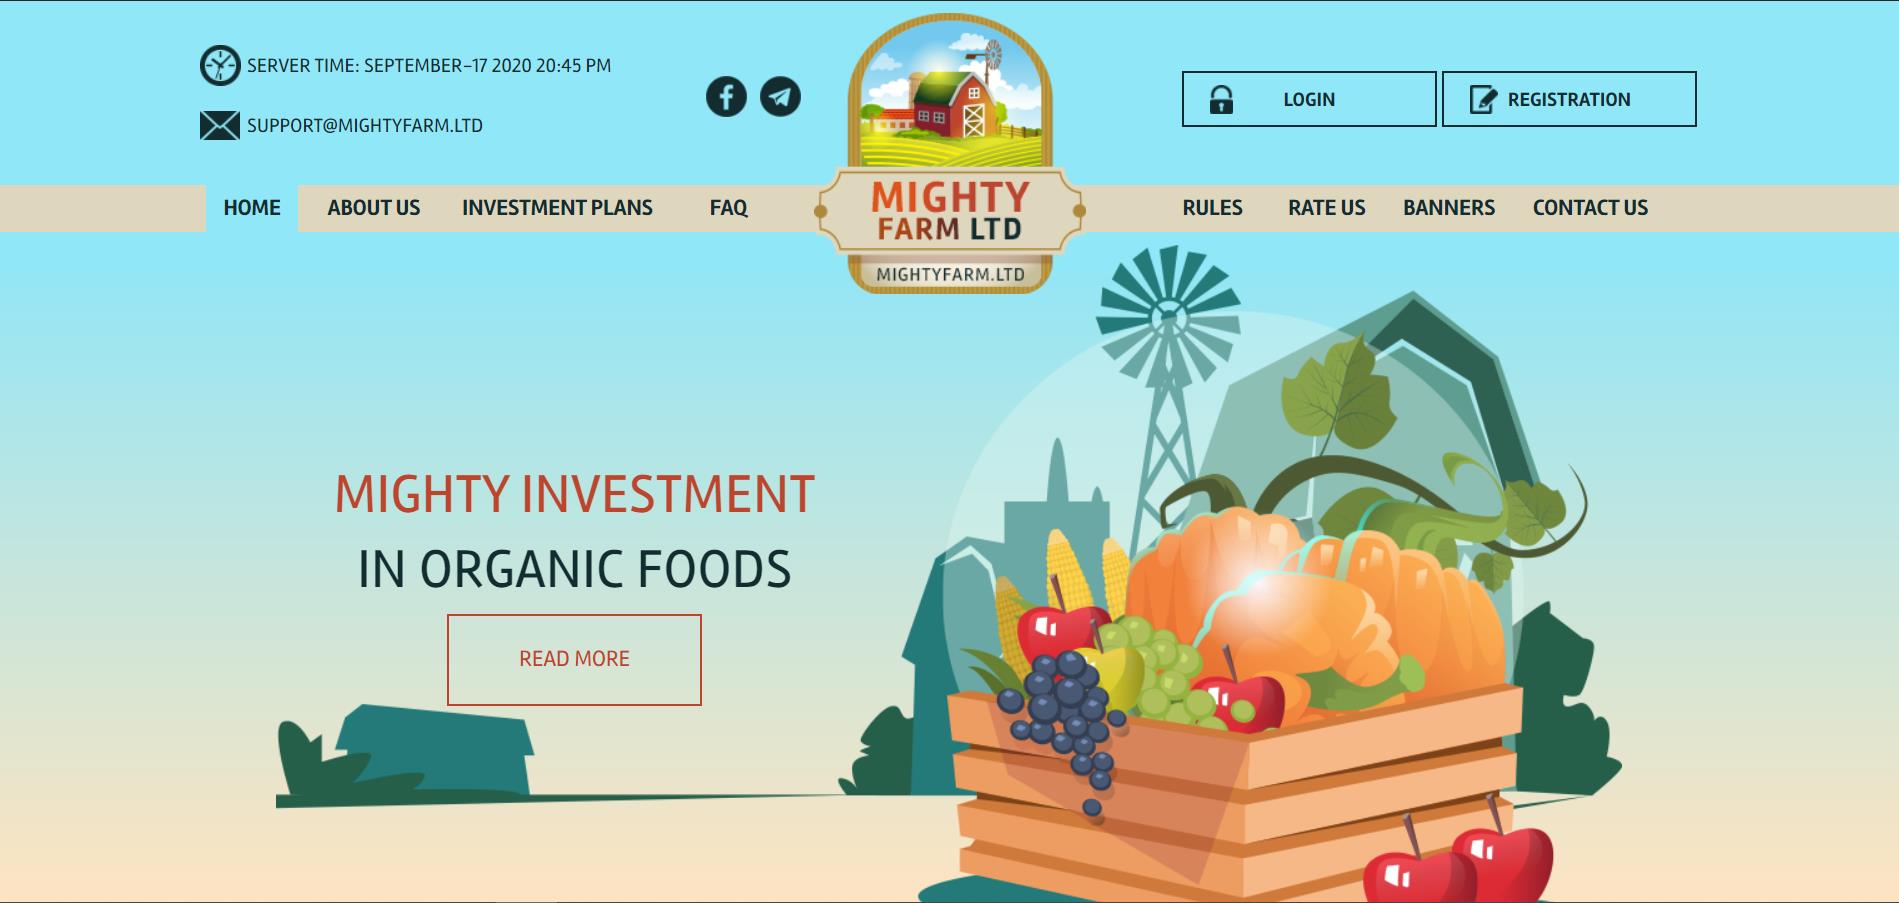 Mighty Farm Ltd